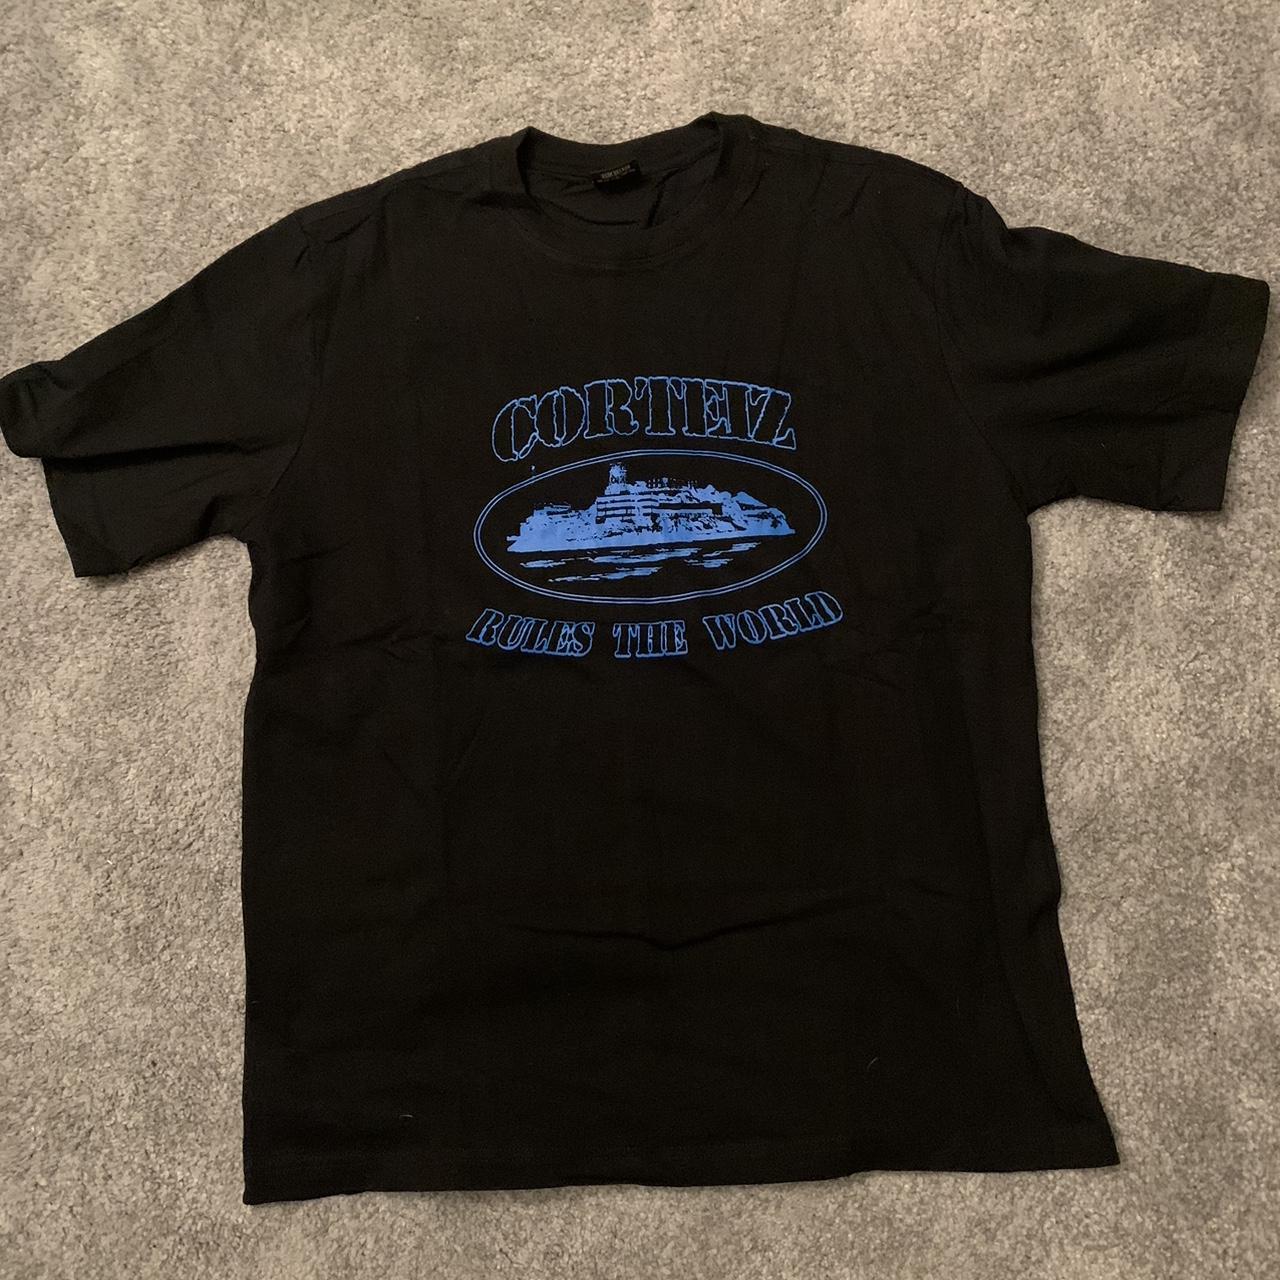 Corteiz Men's Black and Blue T-shirt | Depop